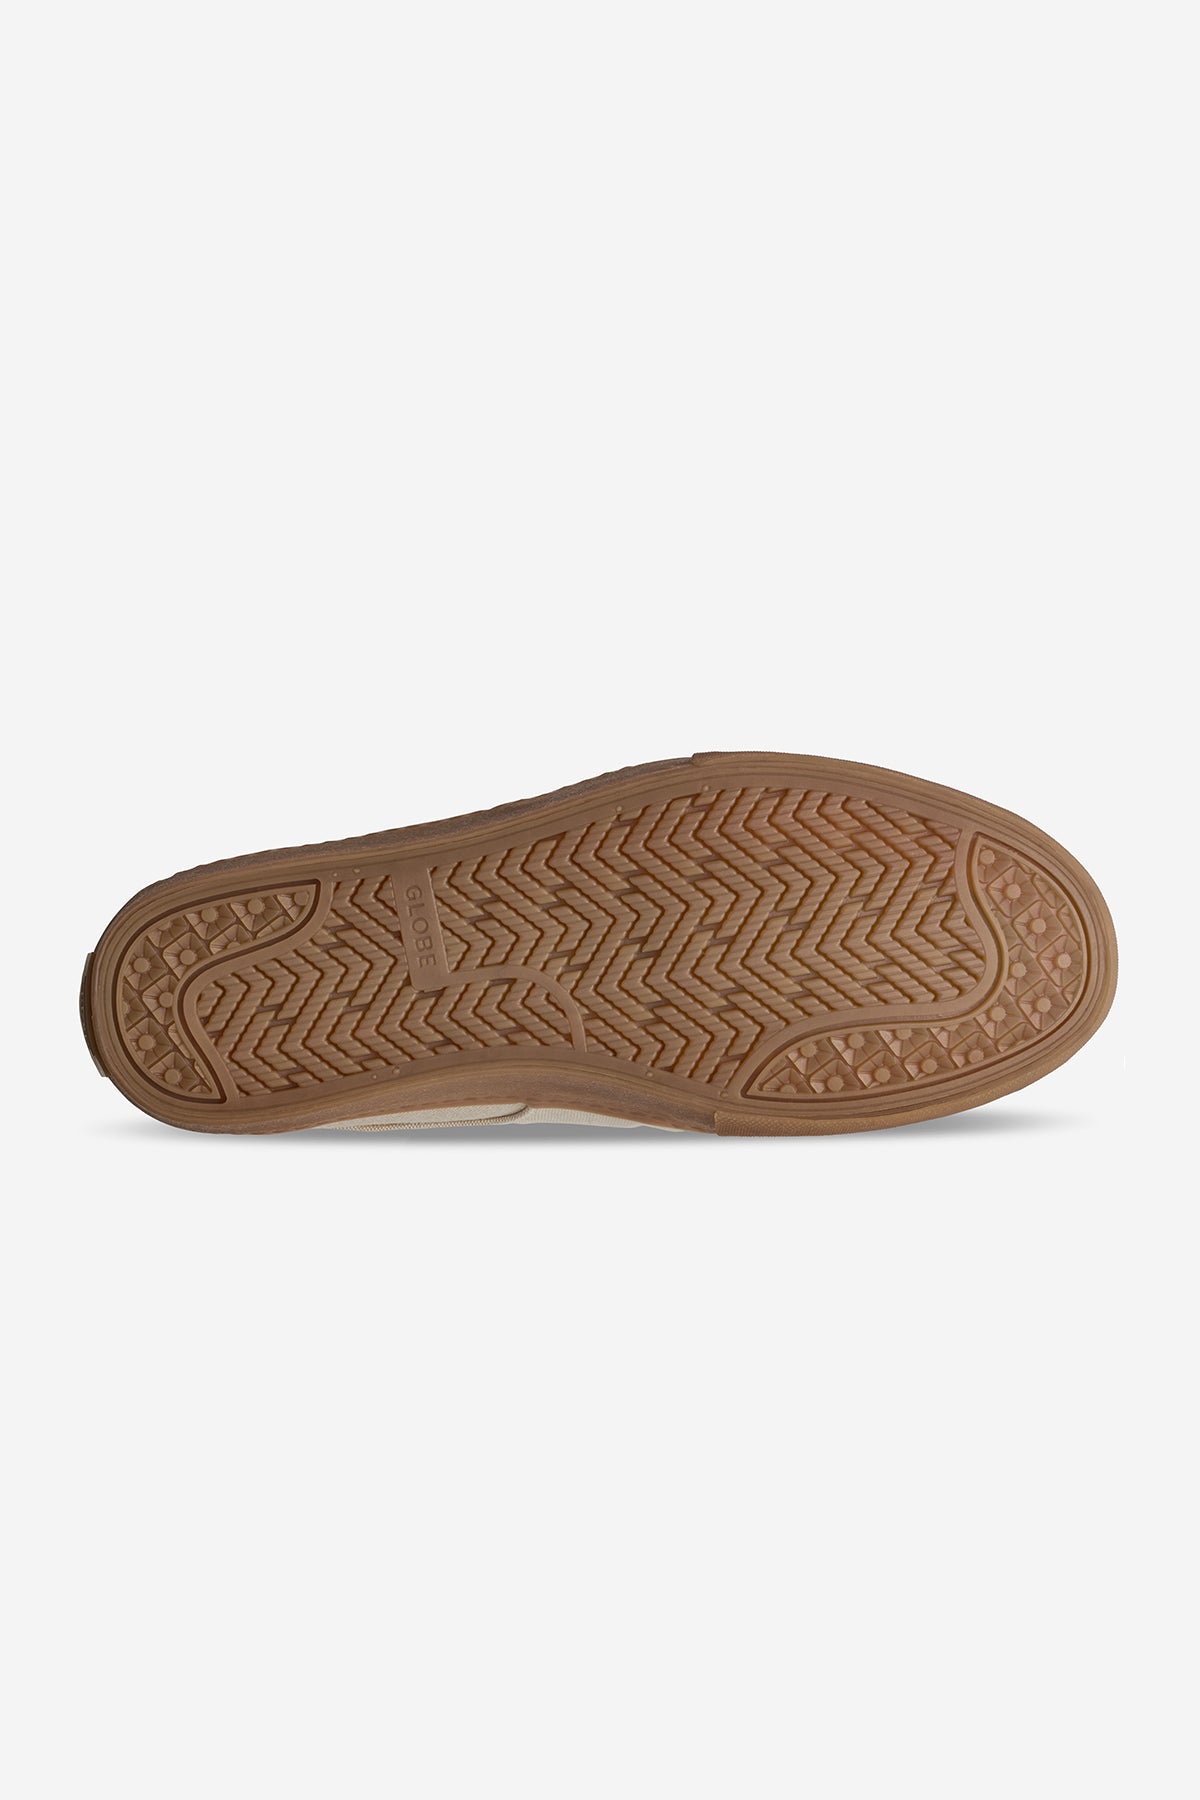 Globe - Liaizon - Hemp/Regrind Gum - skateboard Chaussures